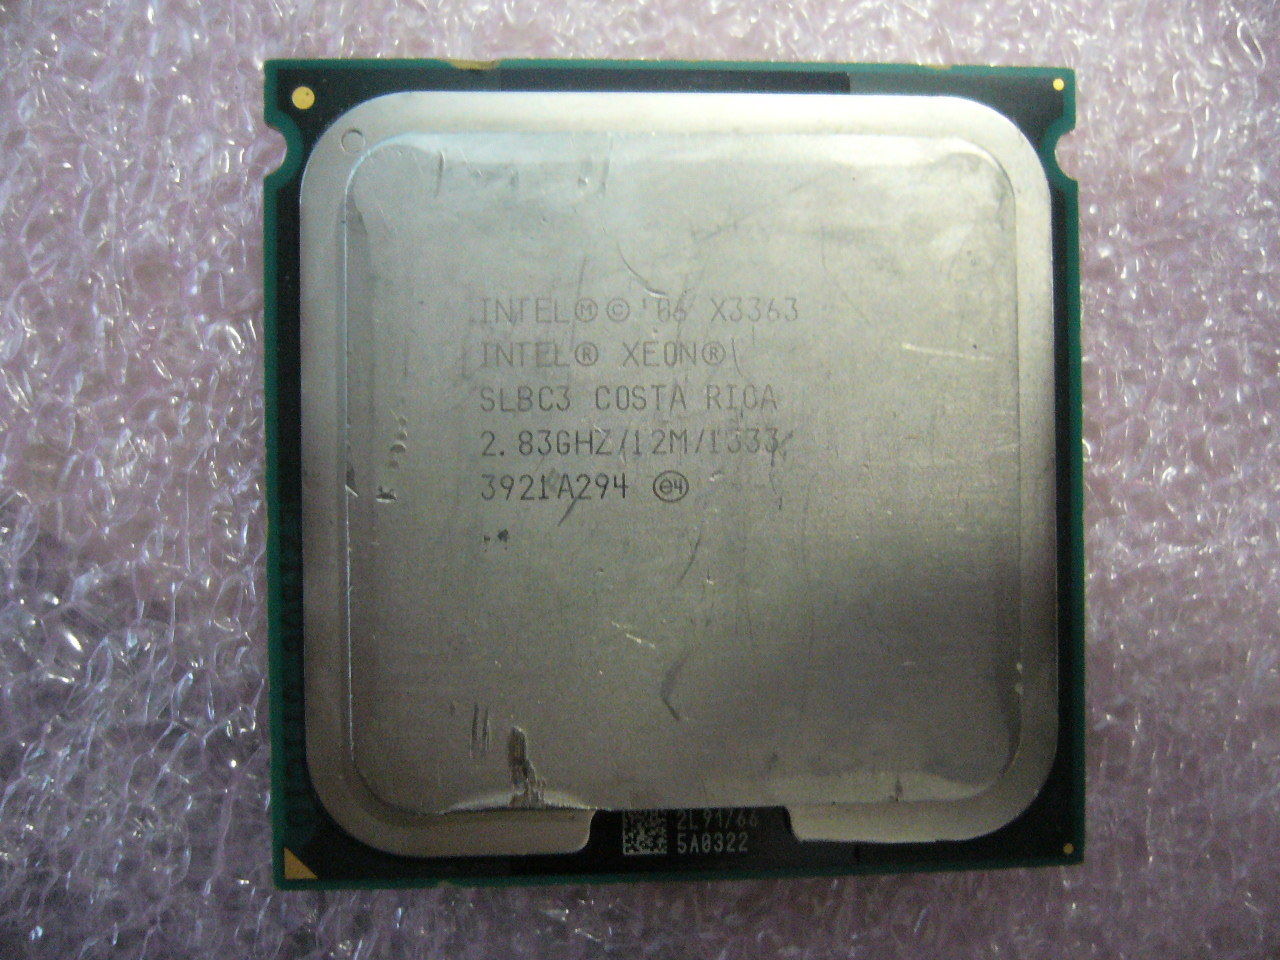 QTY 1x Intel Xeon CPU Quad Core X3363 2.83Ghz/12MB/1333Mhz LGA771 SLASC SLBC3 - zum Schließen ins Bild klicken